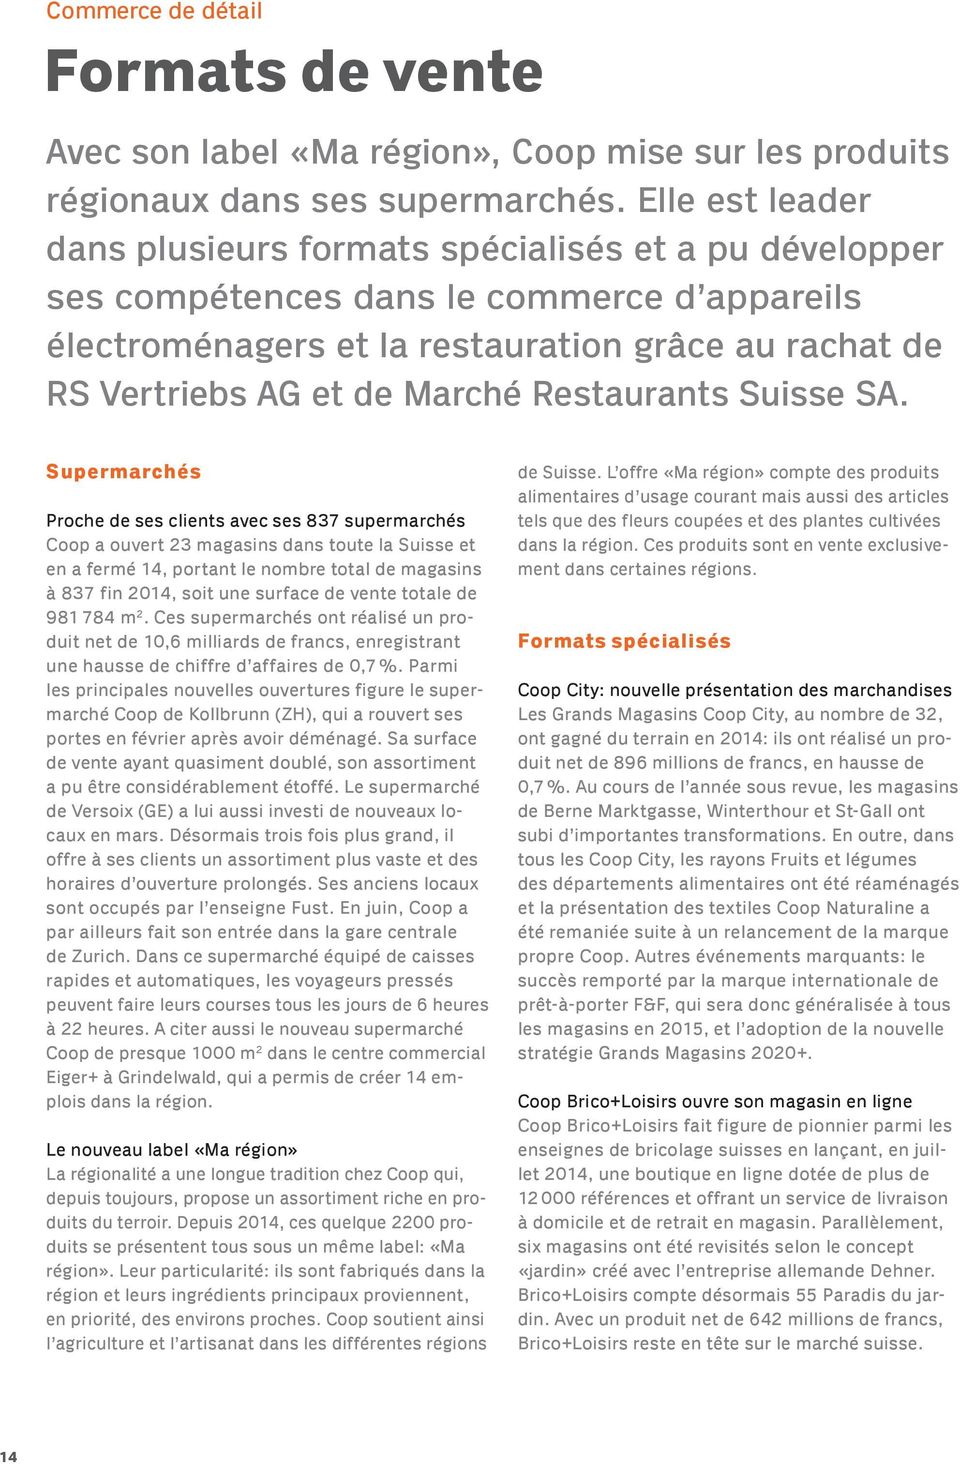 Restaurants Suisse SA.